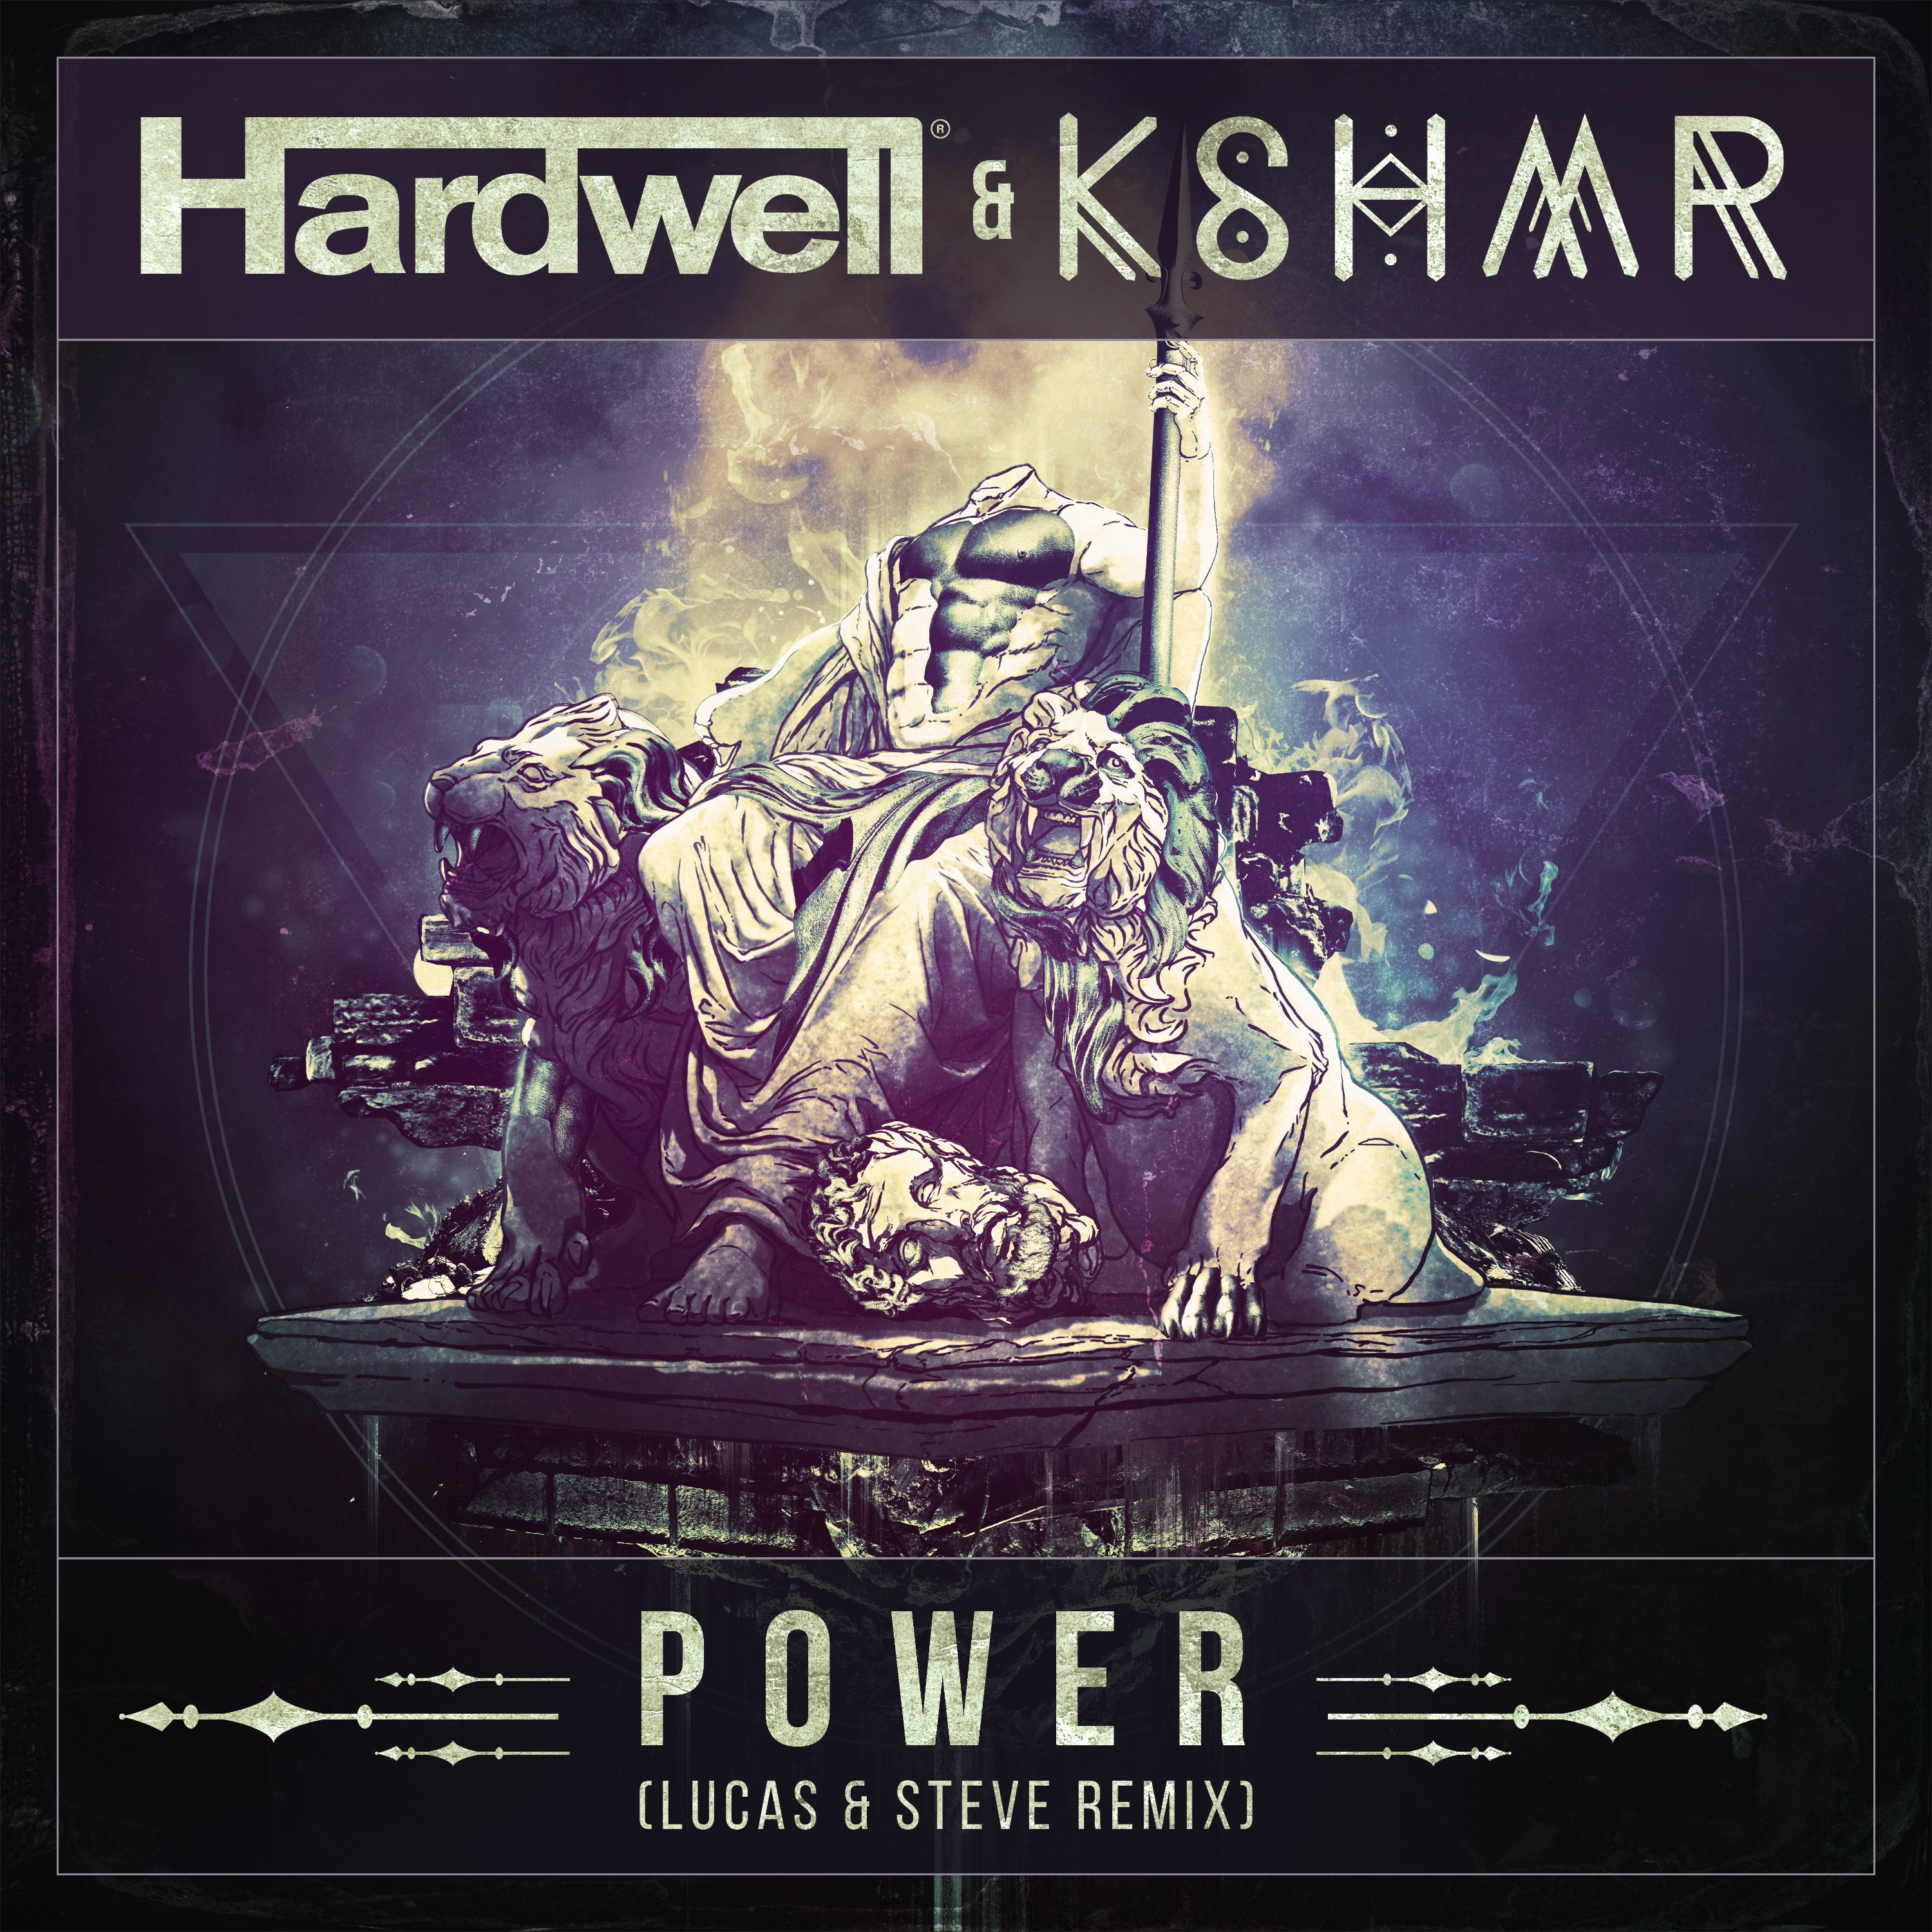 Hardwell & KSHMR - Power (Lucas & Steve Remix) [OUT NOW]